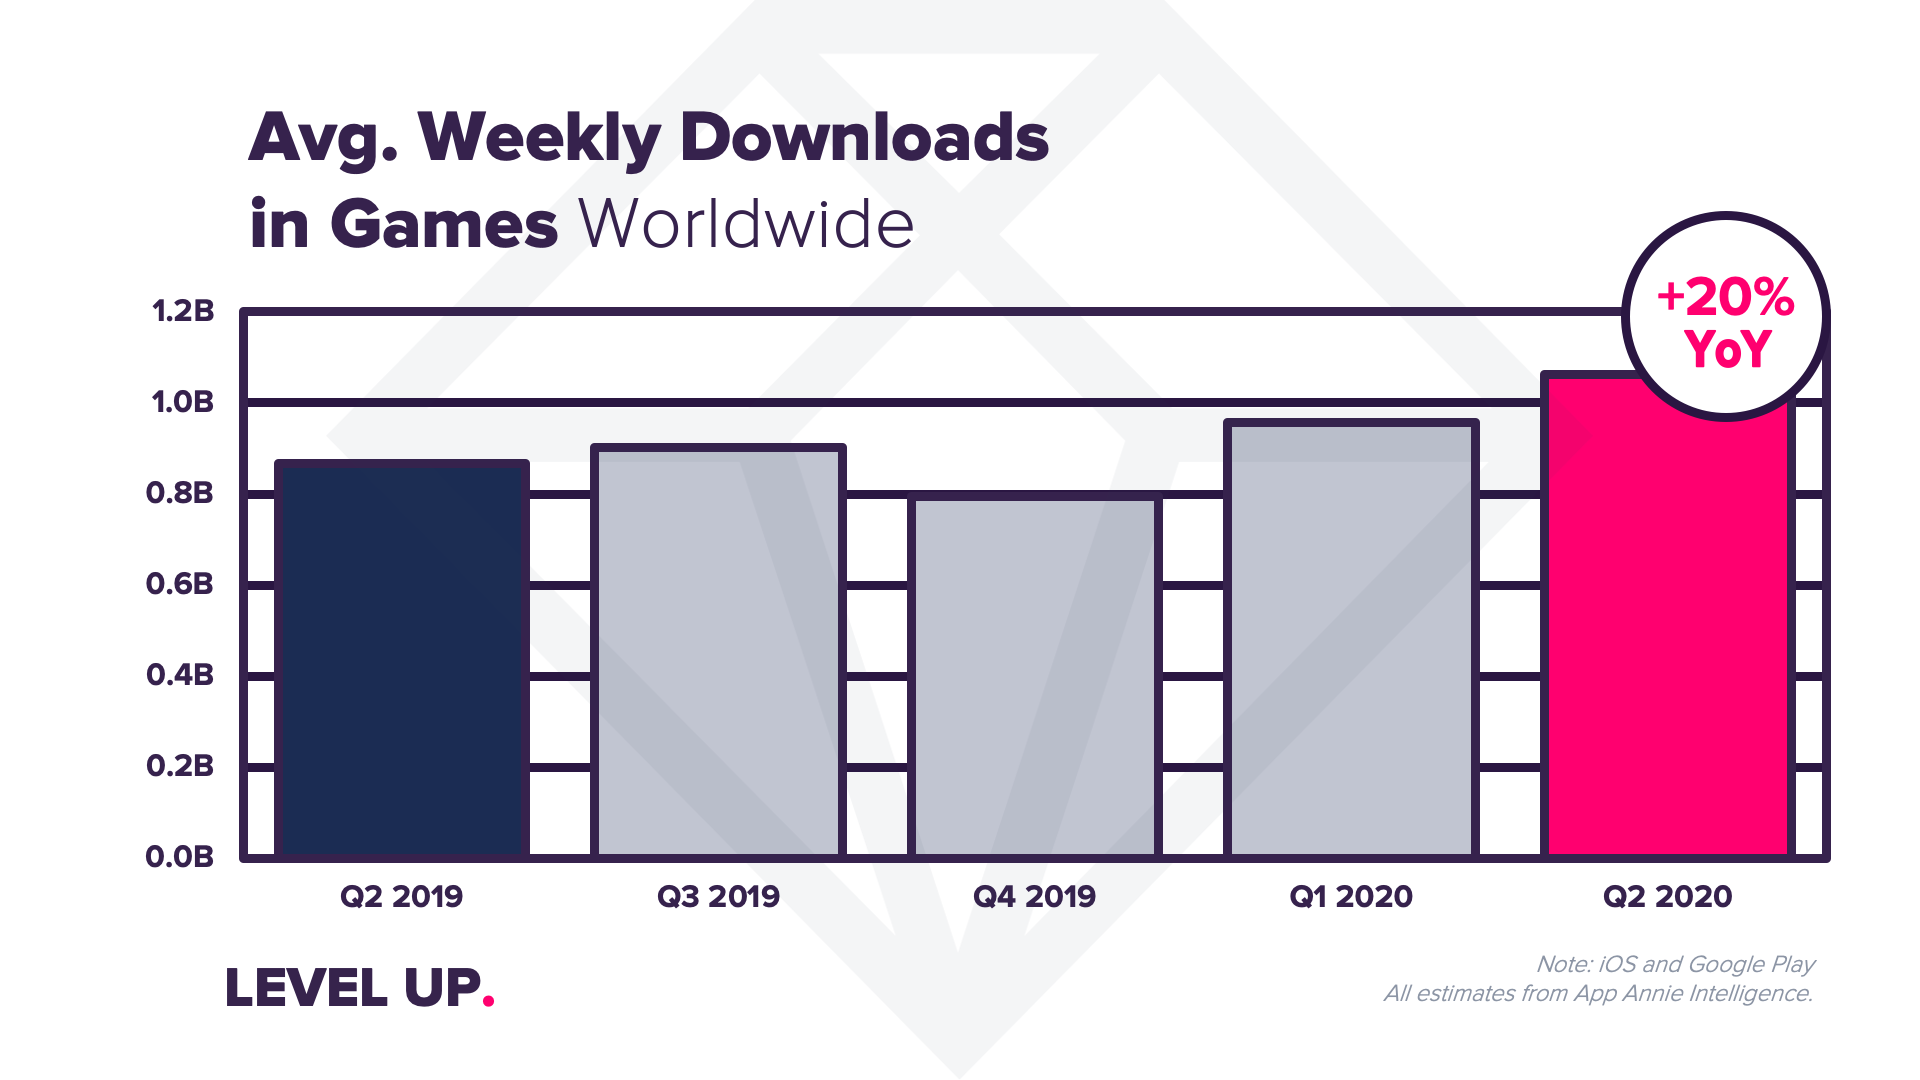 Mobile Games Generate 1 Billion Downloads Each Week